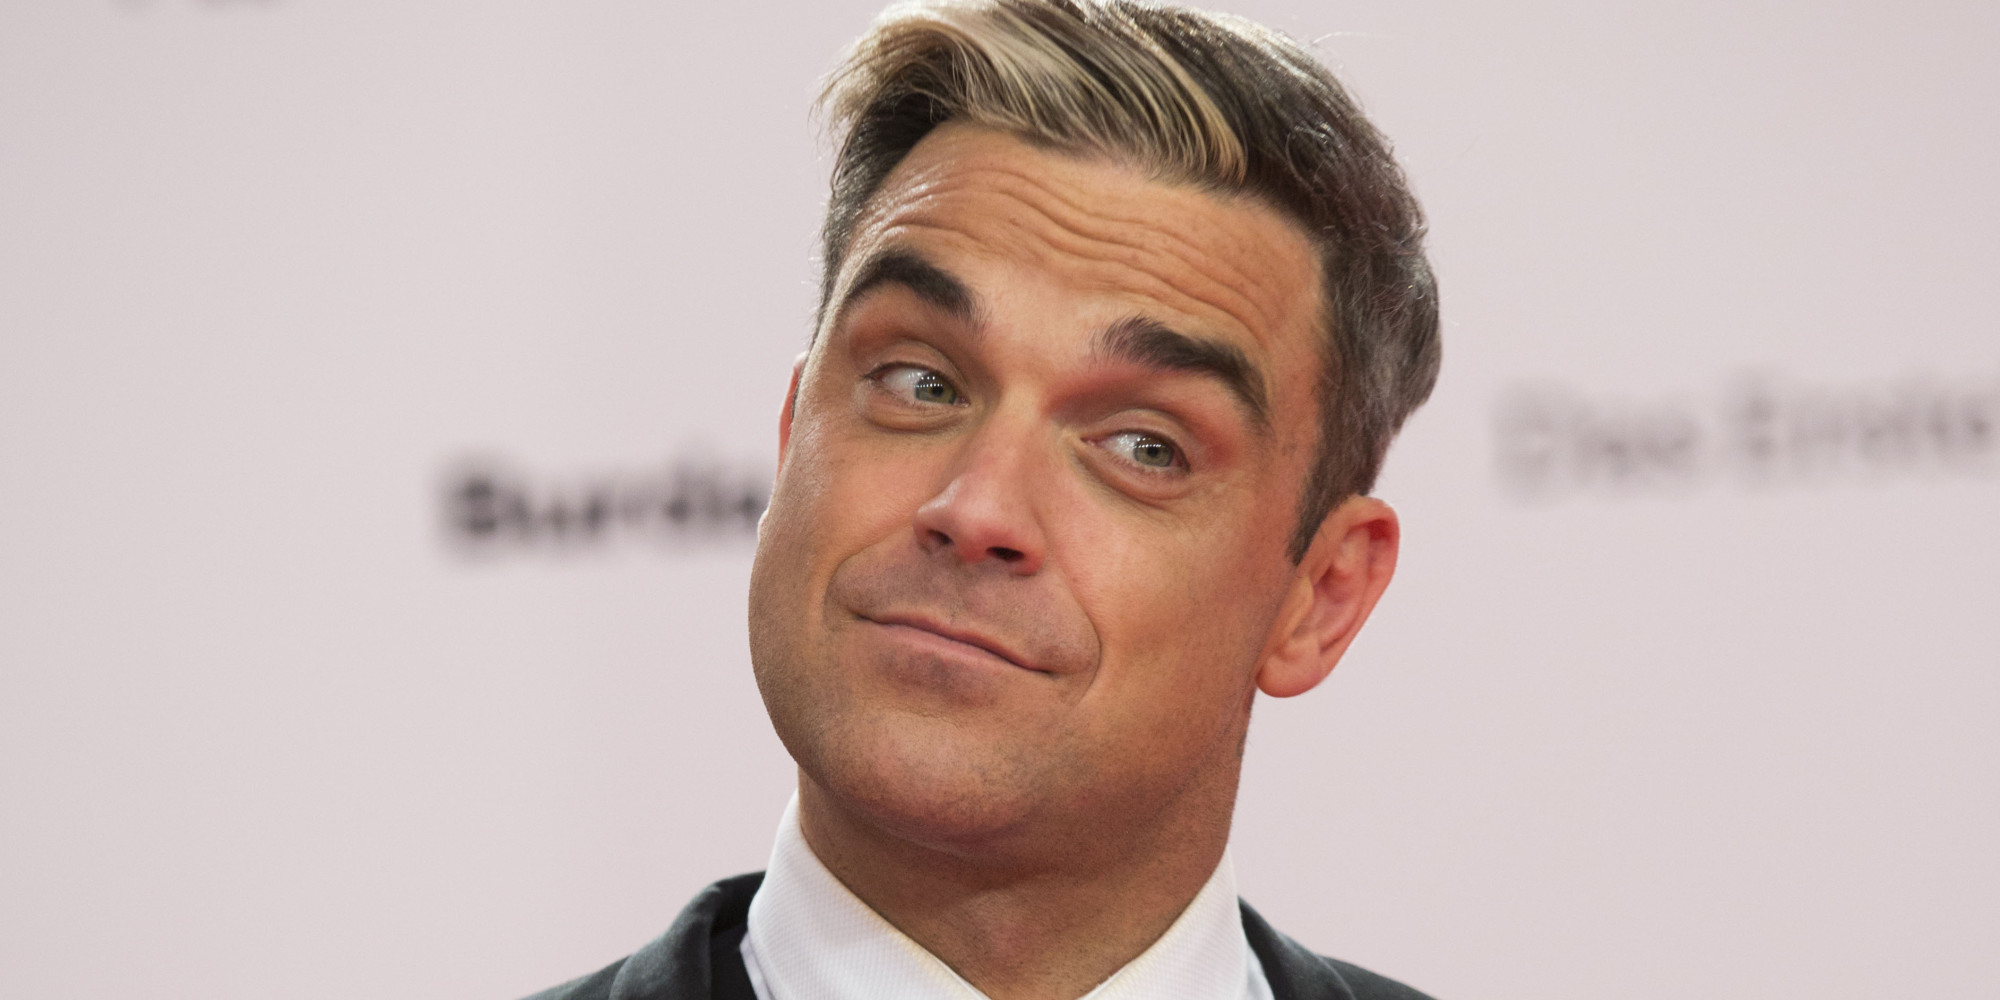 Robbie Williams. Heavy Entertainment Show. Nuevo disco. Cúsica Plus